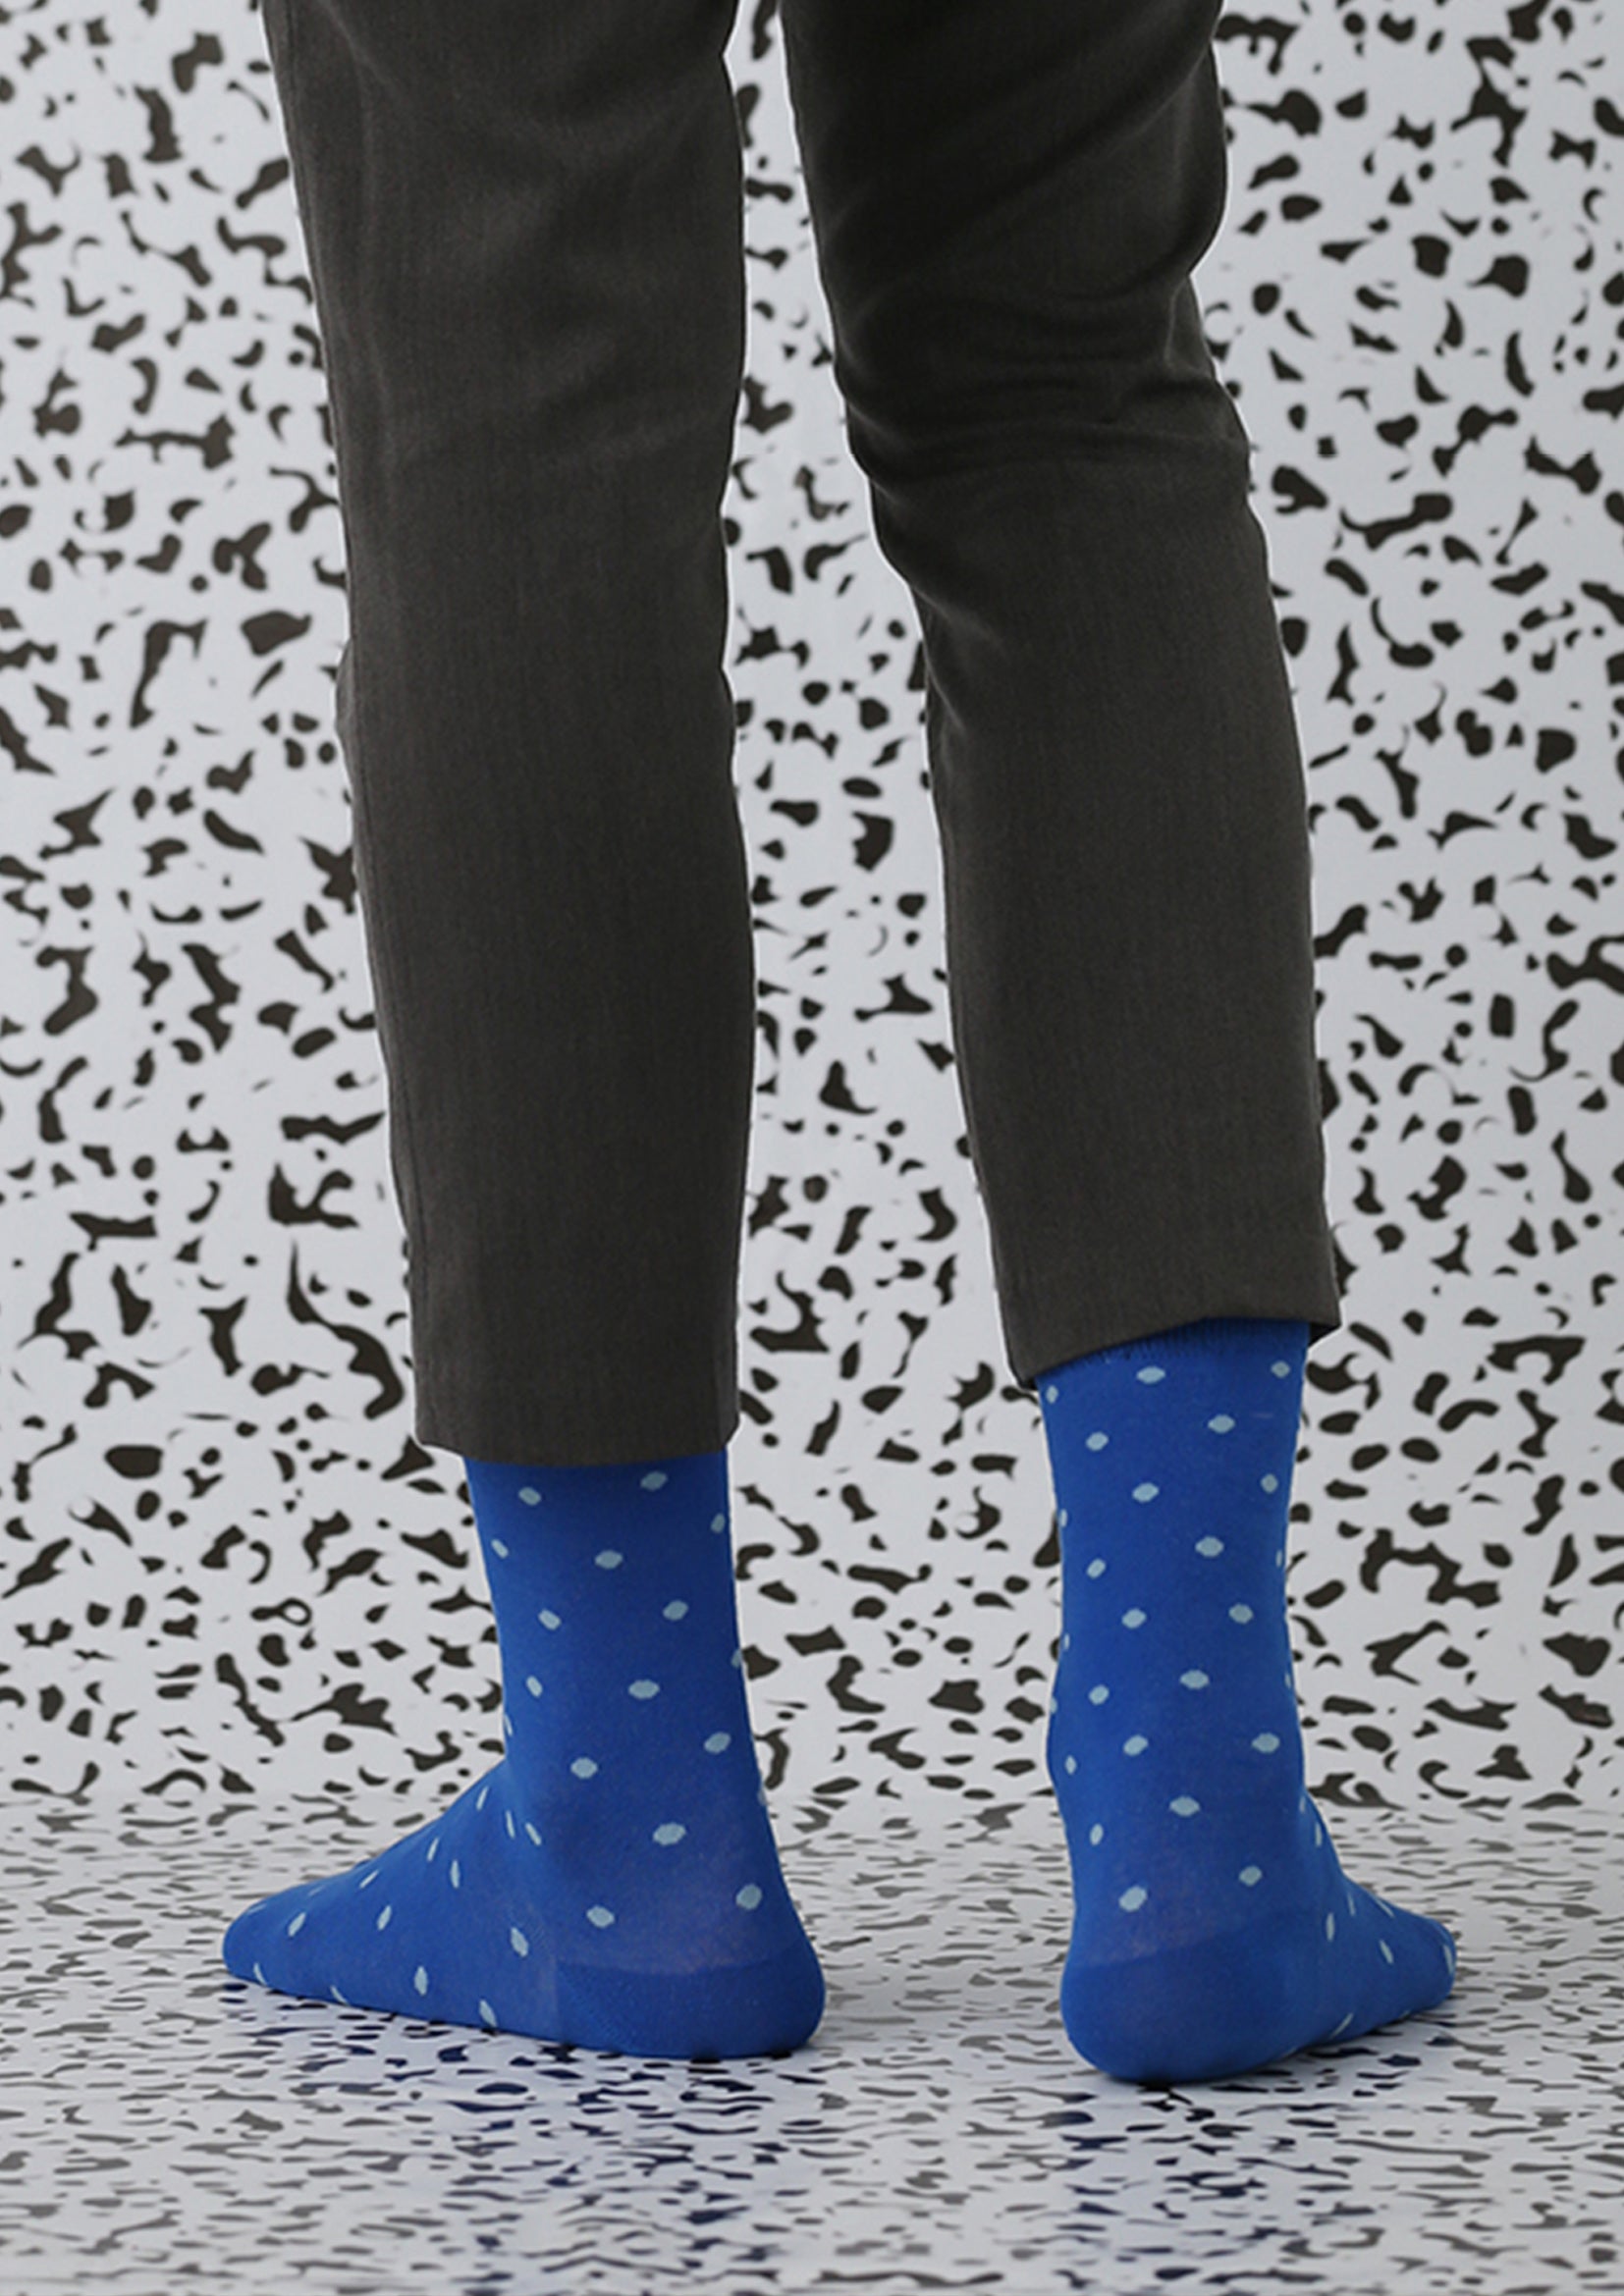 Tiny polka dot mid-calf socks - blue